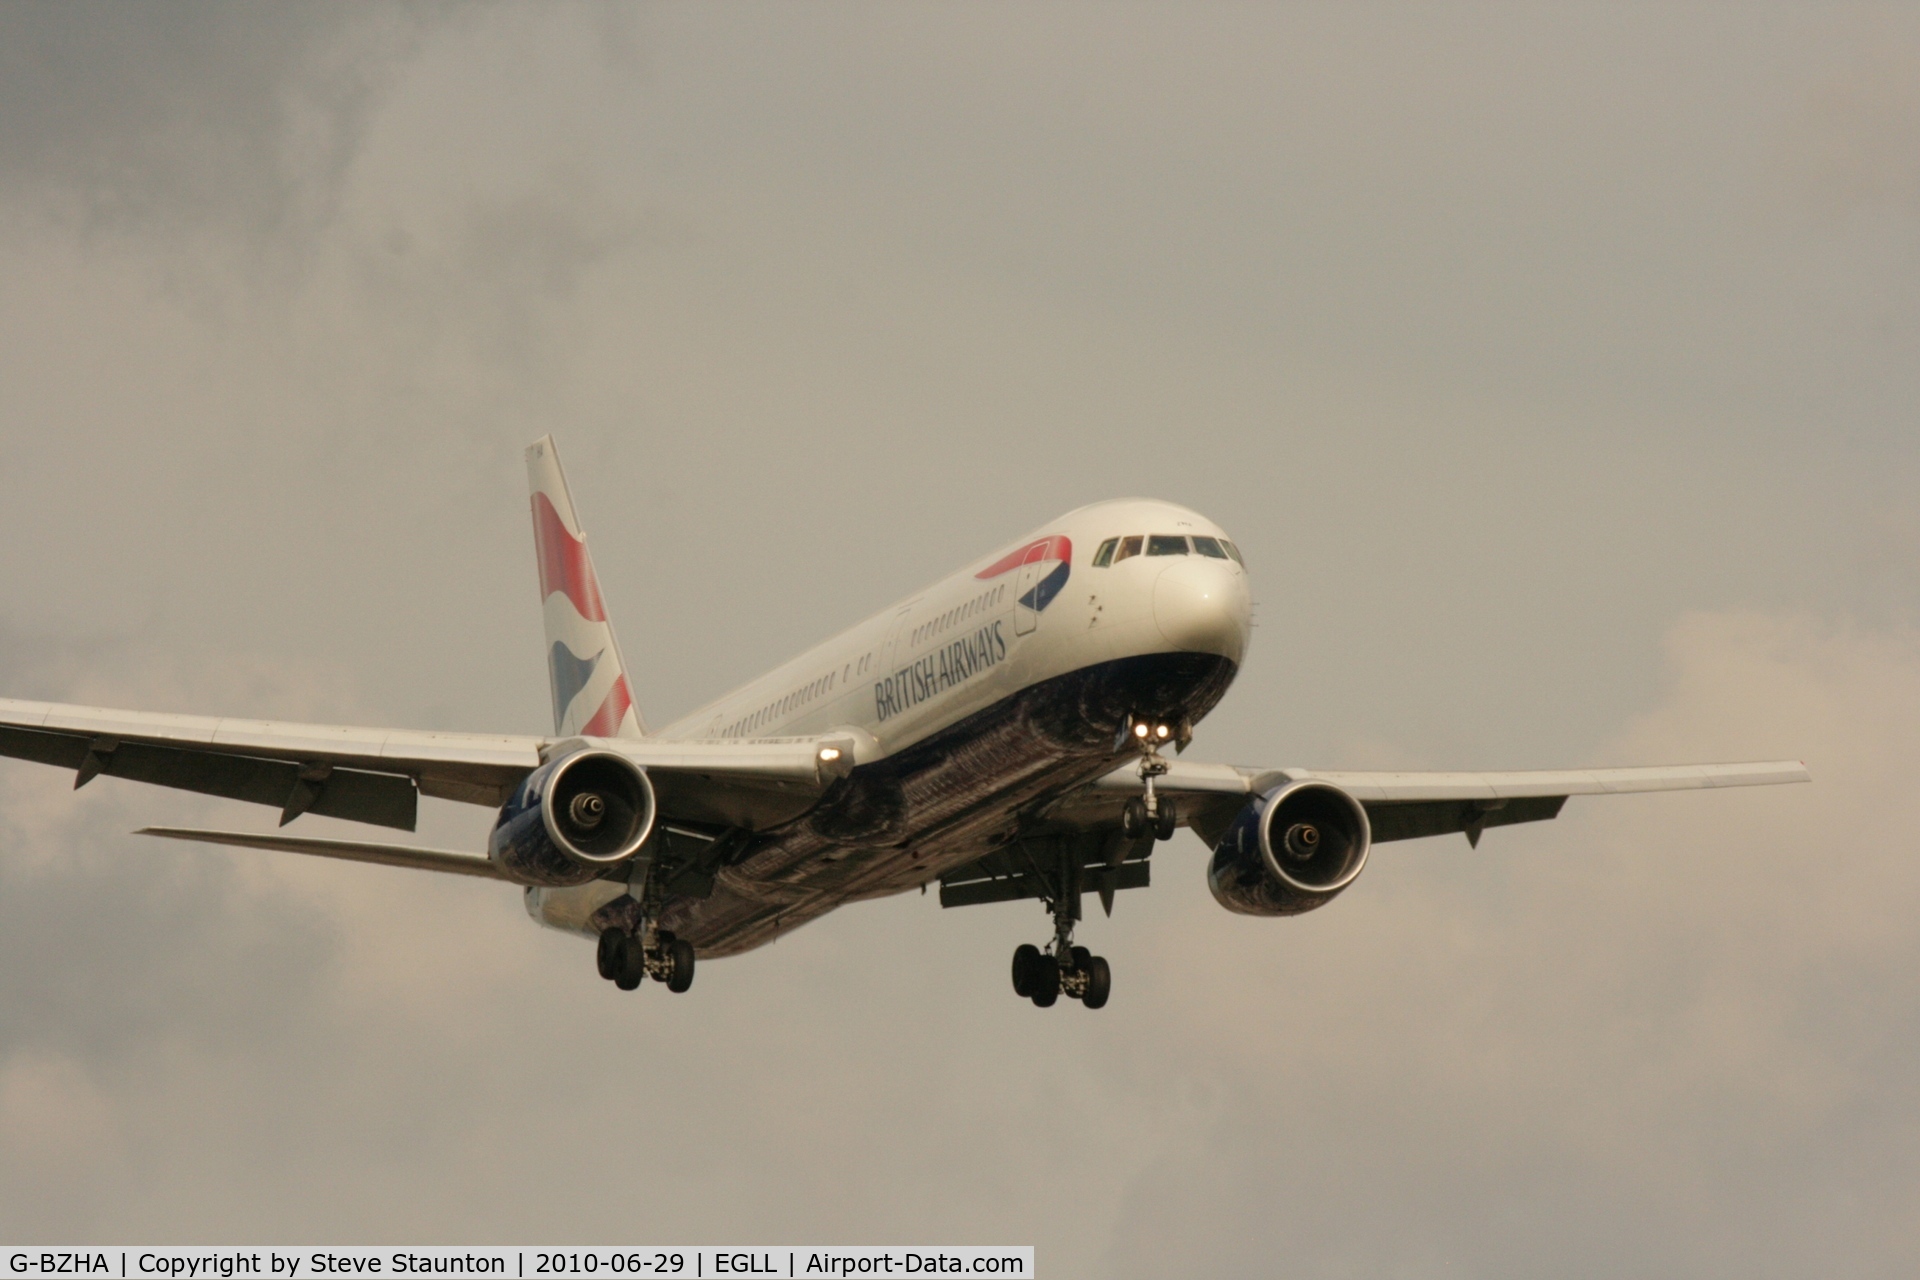 G-BZHA, 1998 Boeing 767-336 C/N 29230, Taken at Heathrow Airport, June 2010